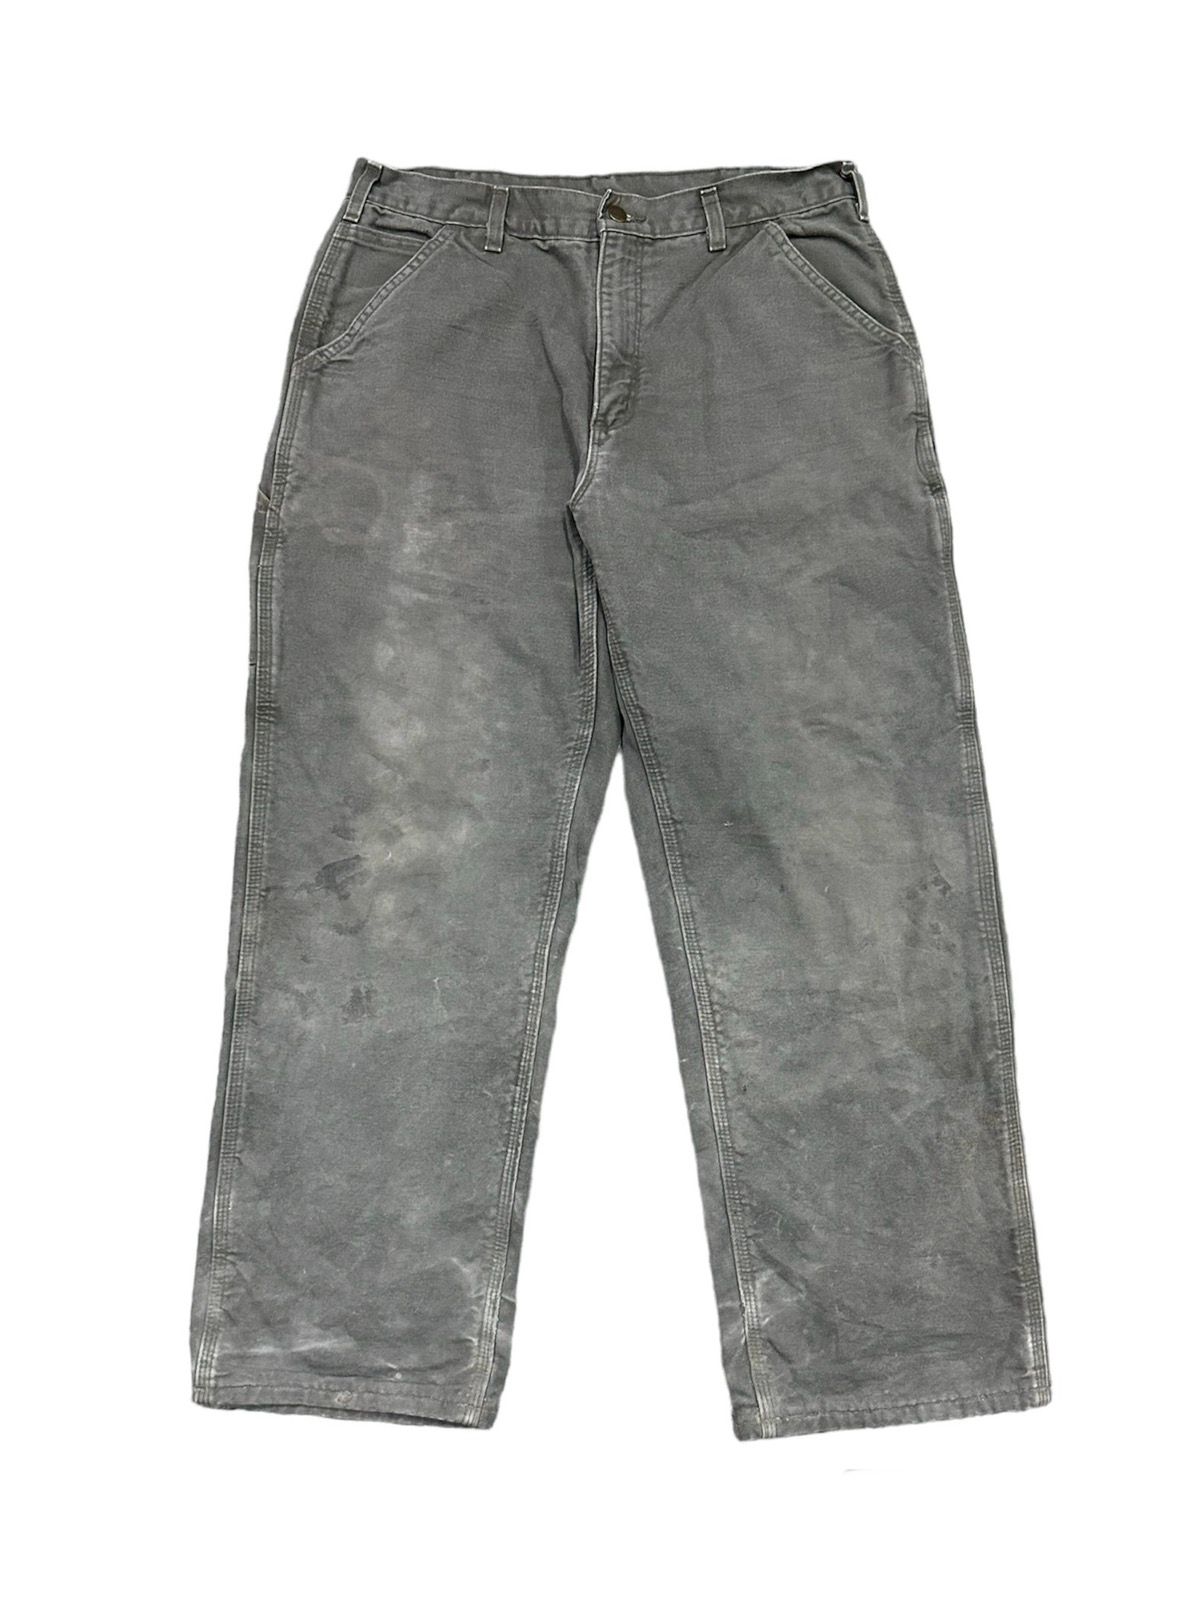 Vintage Carhatt Baggy Flannel-lined Pants - 1